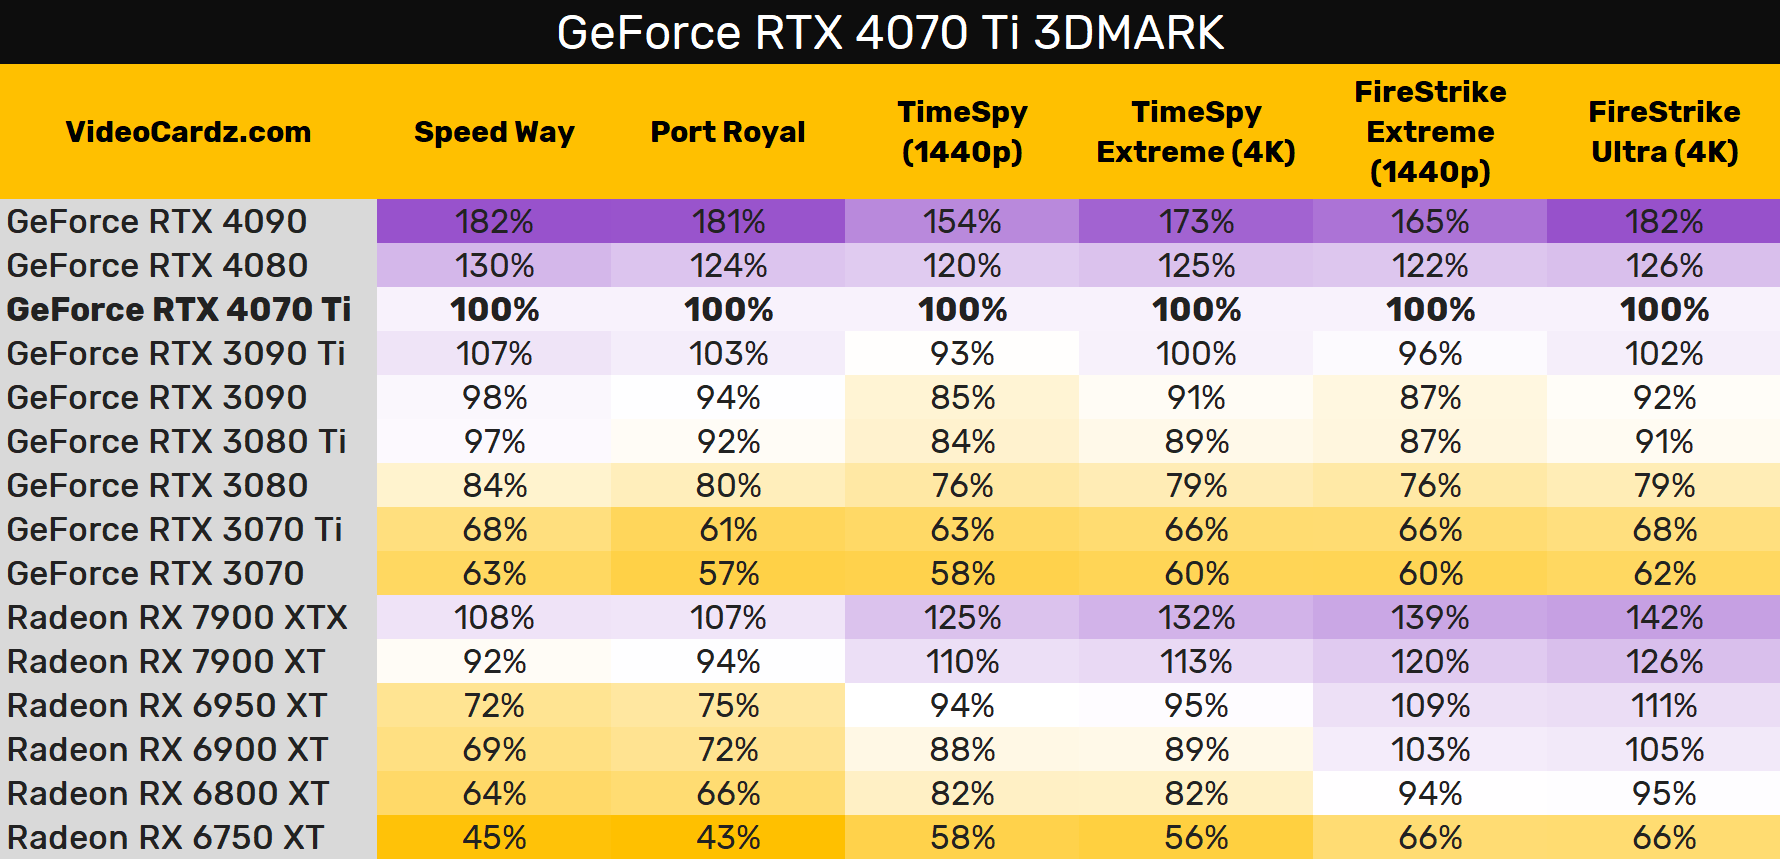 fort dvs. At afsløre NVIDIA GeForce RTX 4070 Ti 3DMark performance leaks out - VideoCardz.com